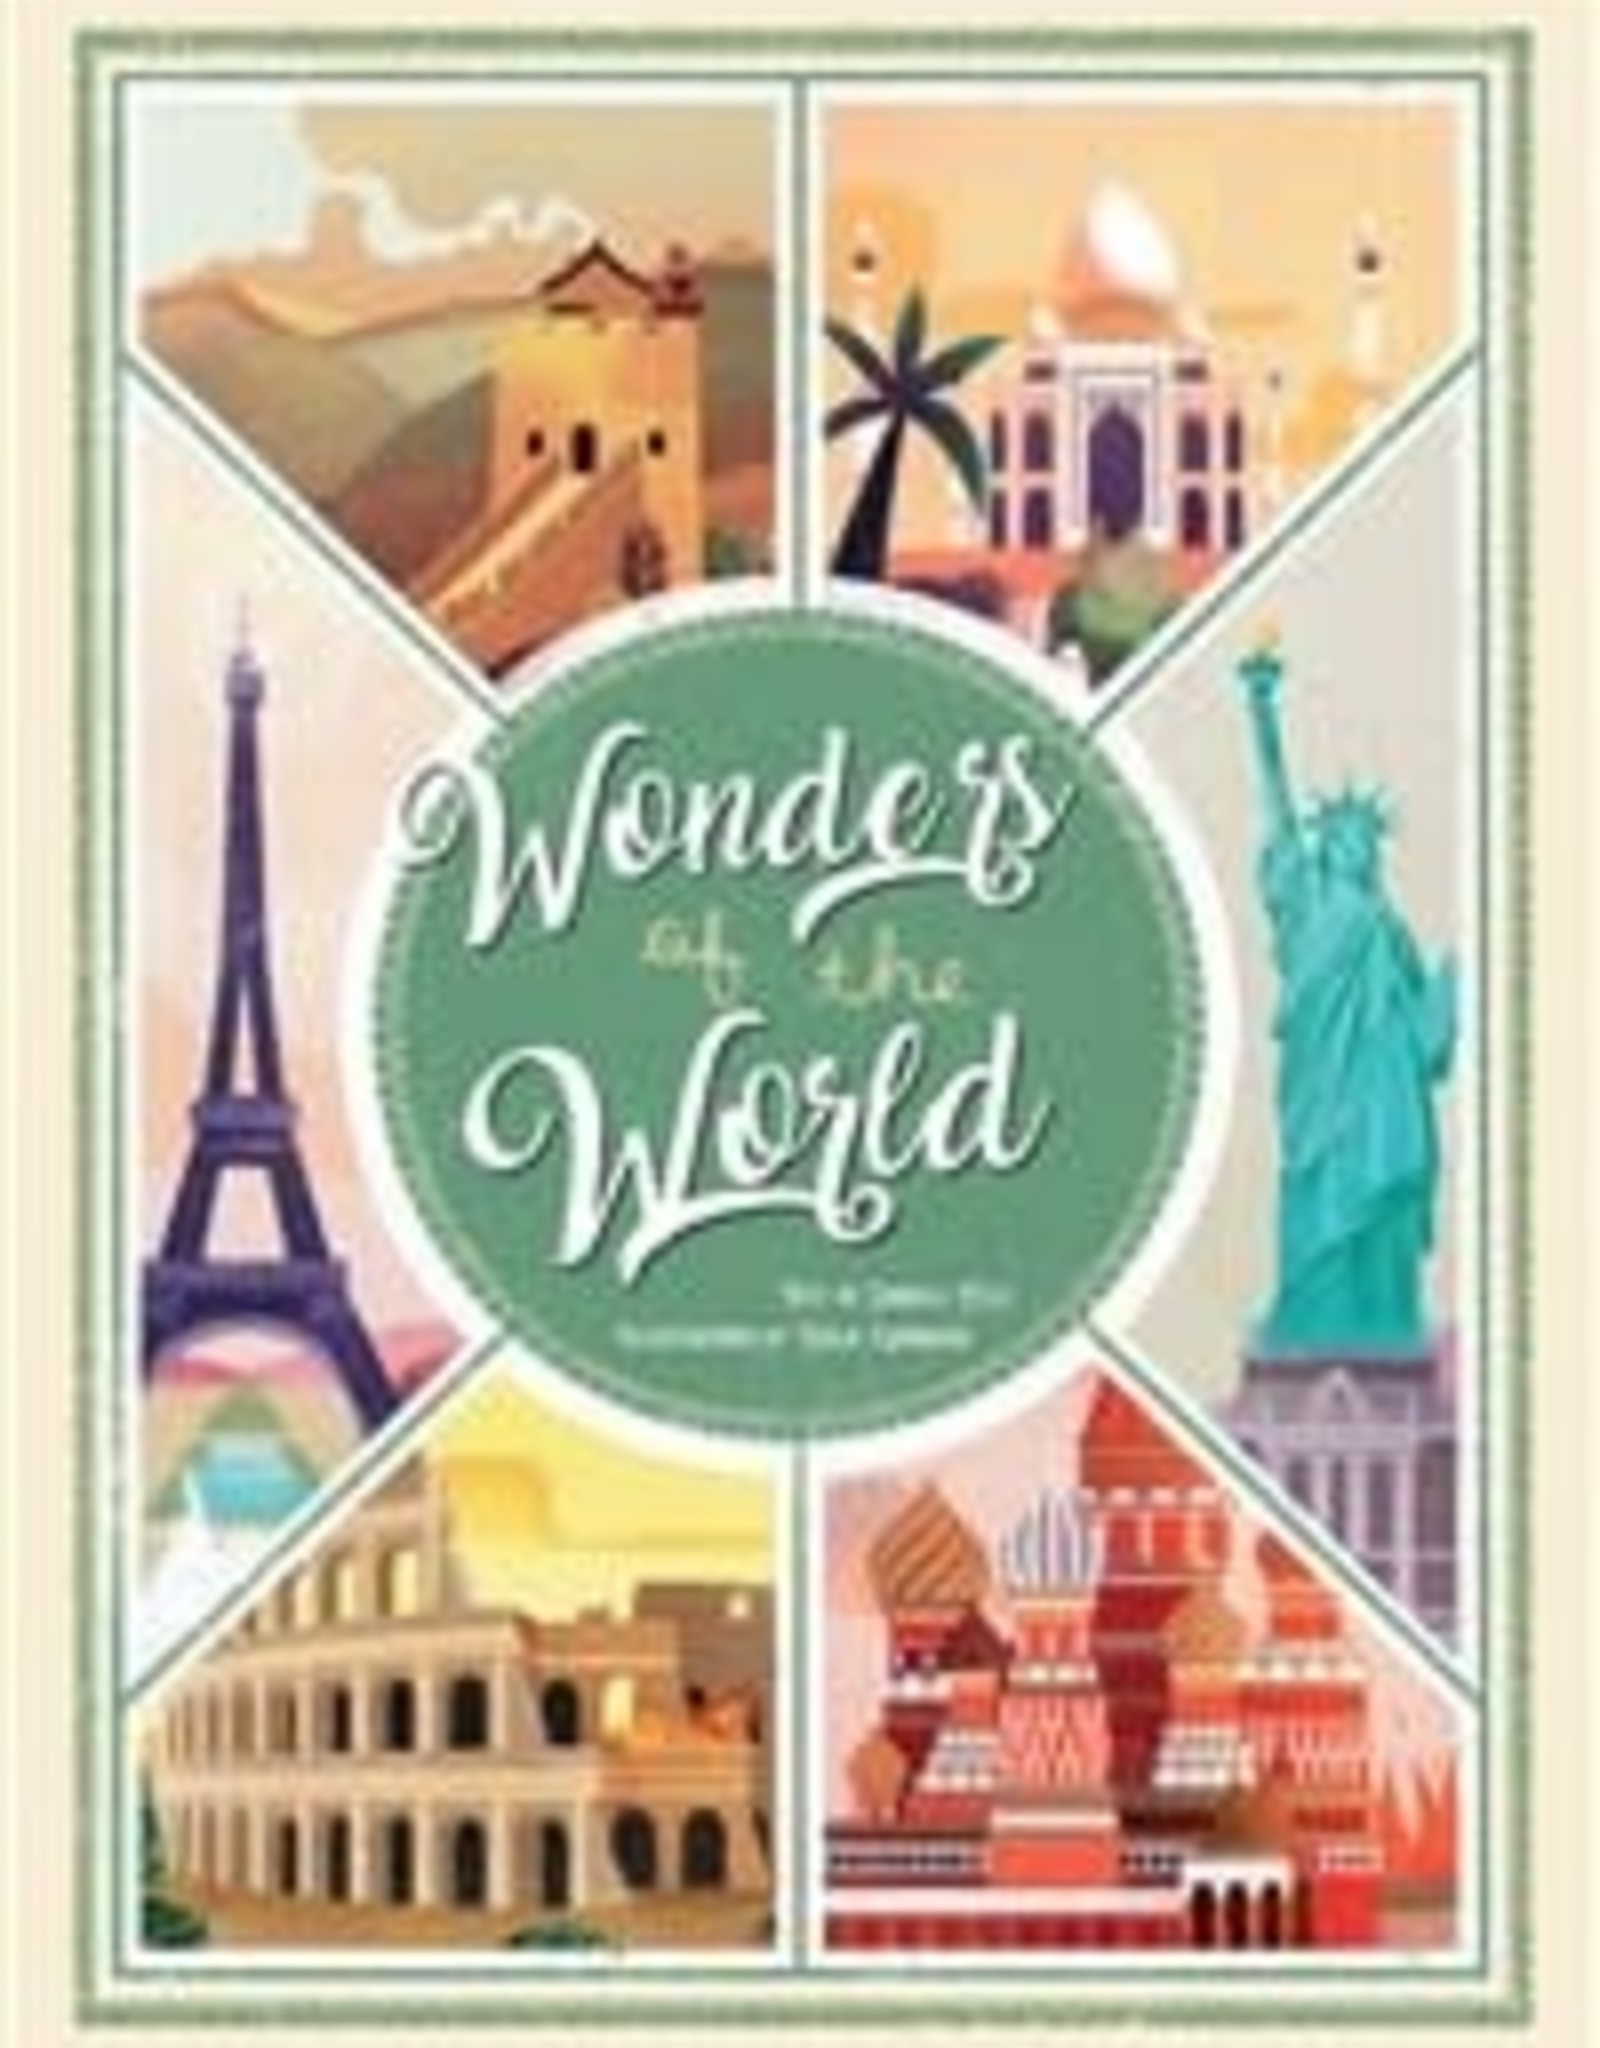 Thomas Allen & Son Wonders of the World